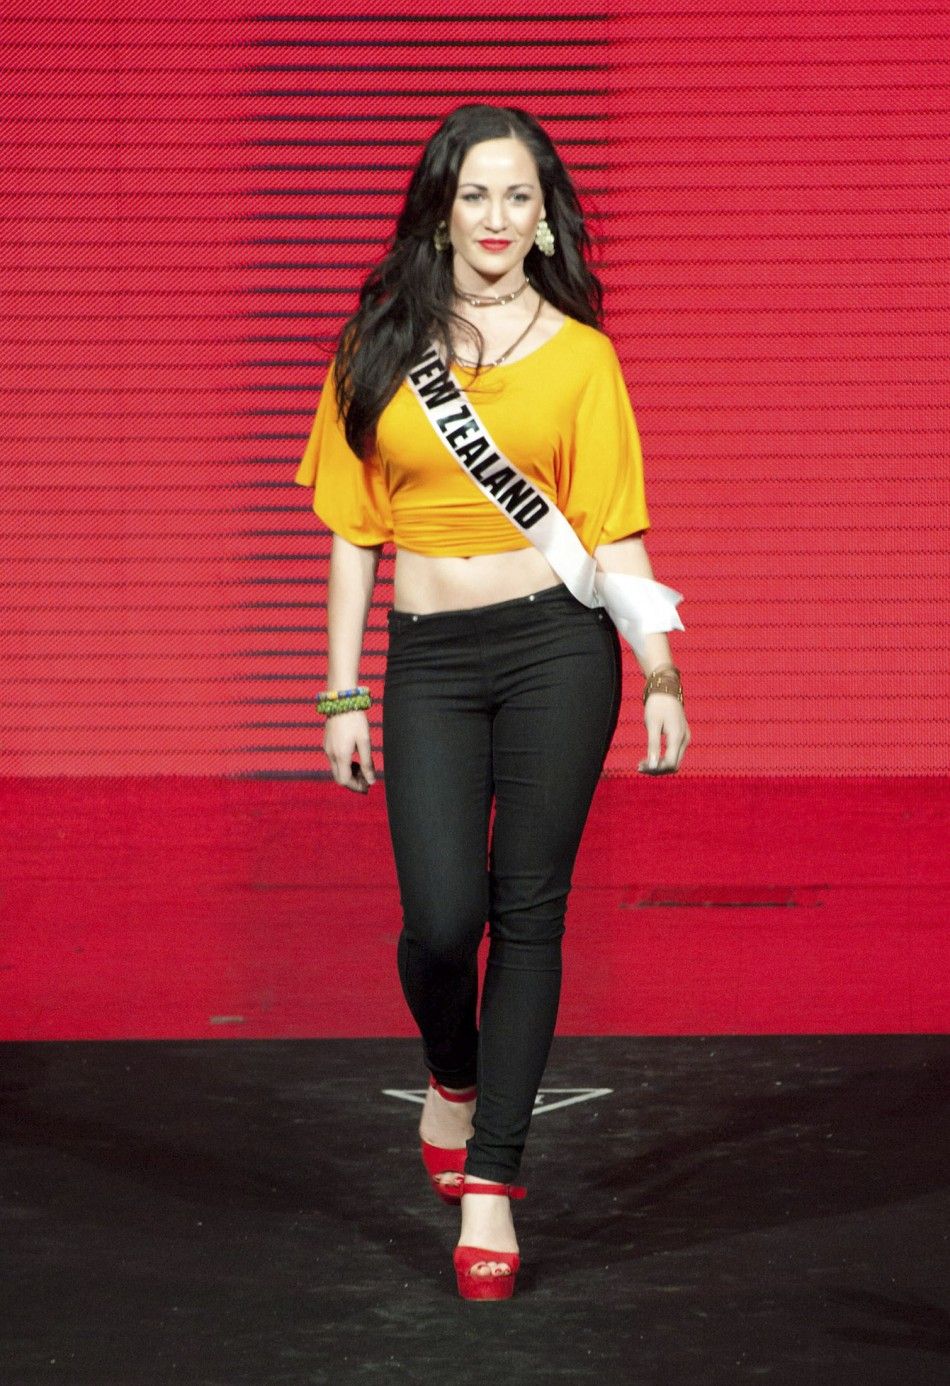 Miss Universe New Zealand 2011 Priyani Puketapu parades during a fashion show at The Week night club in Sao Paulo 